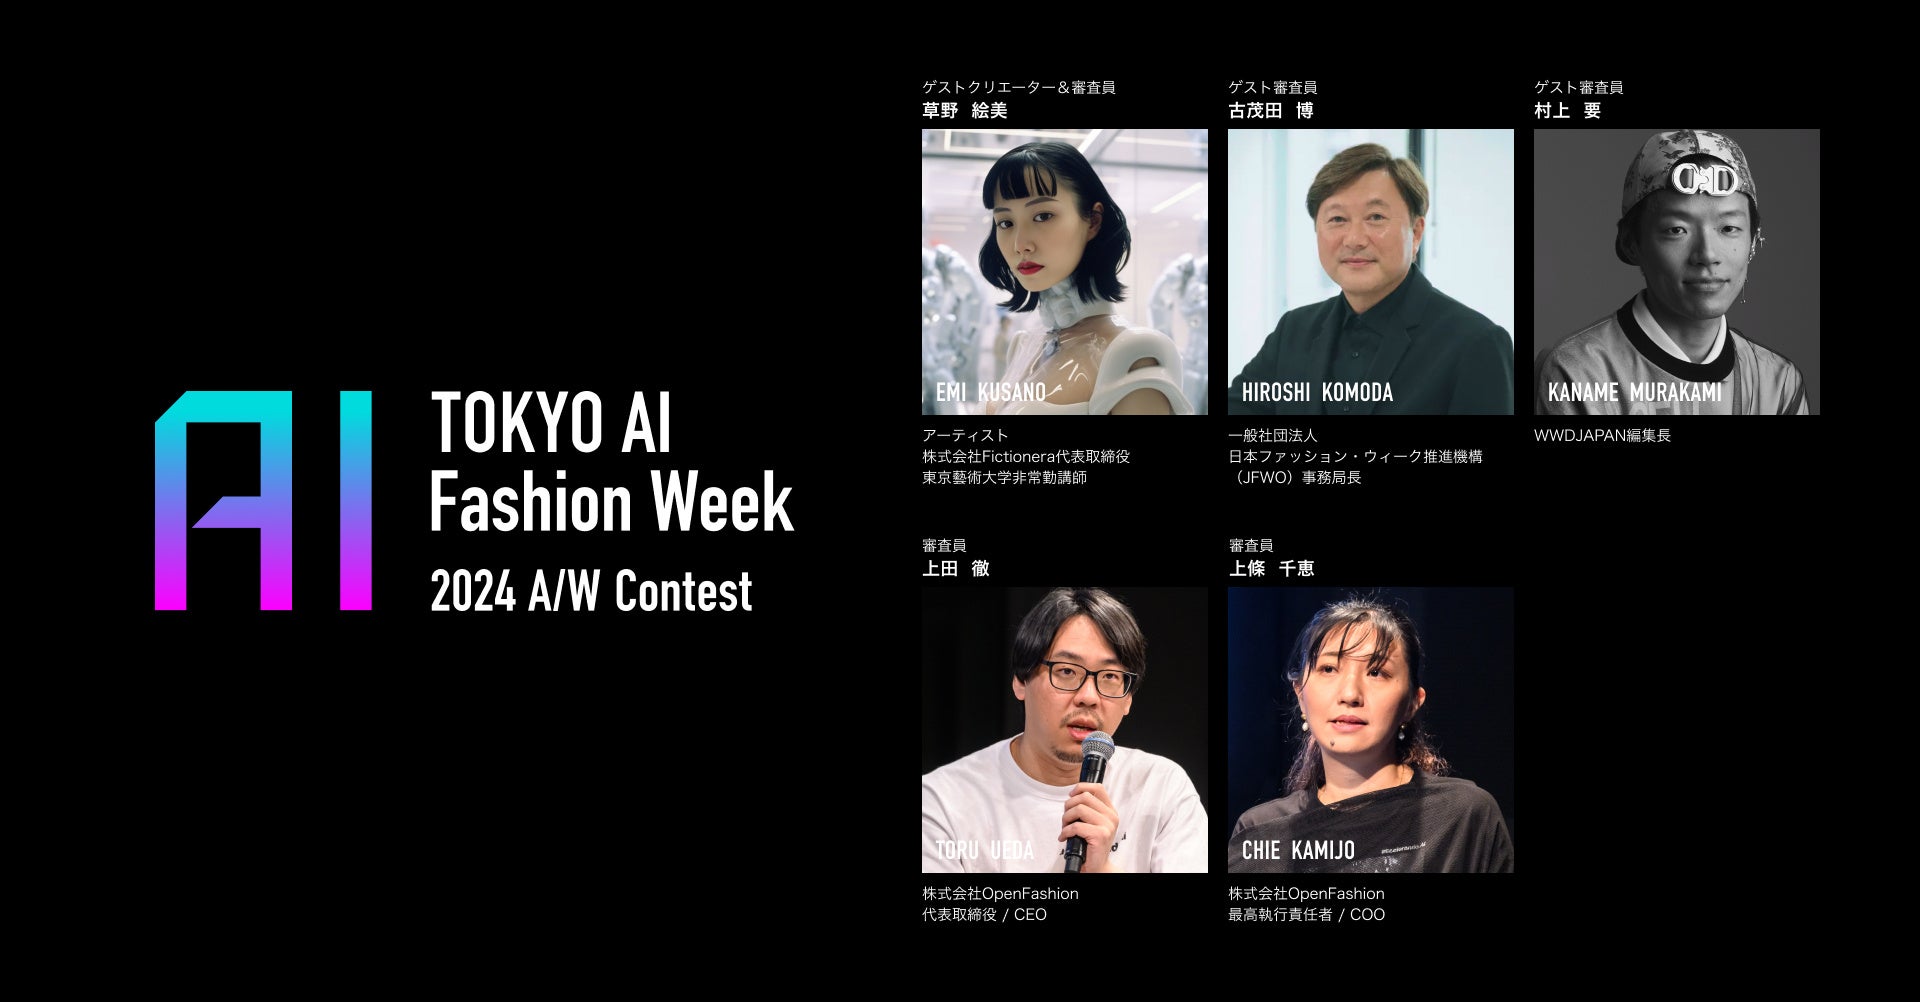 AIpt@bVReXguTOKYO AI Fashion Week - 2024 A/W ContestvA[eBXg G͂ߍؐRI